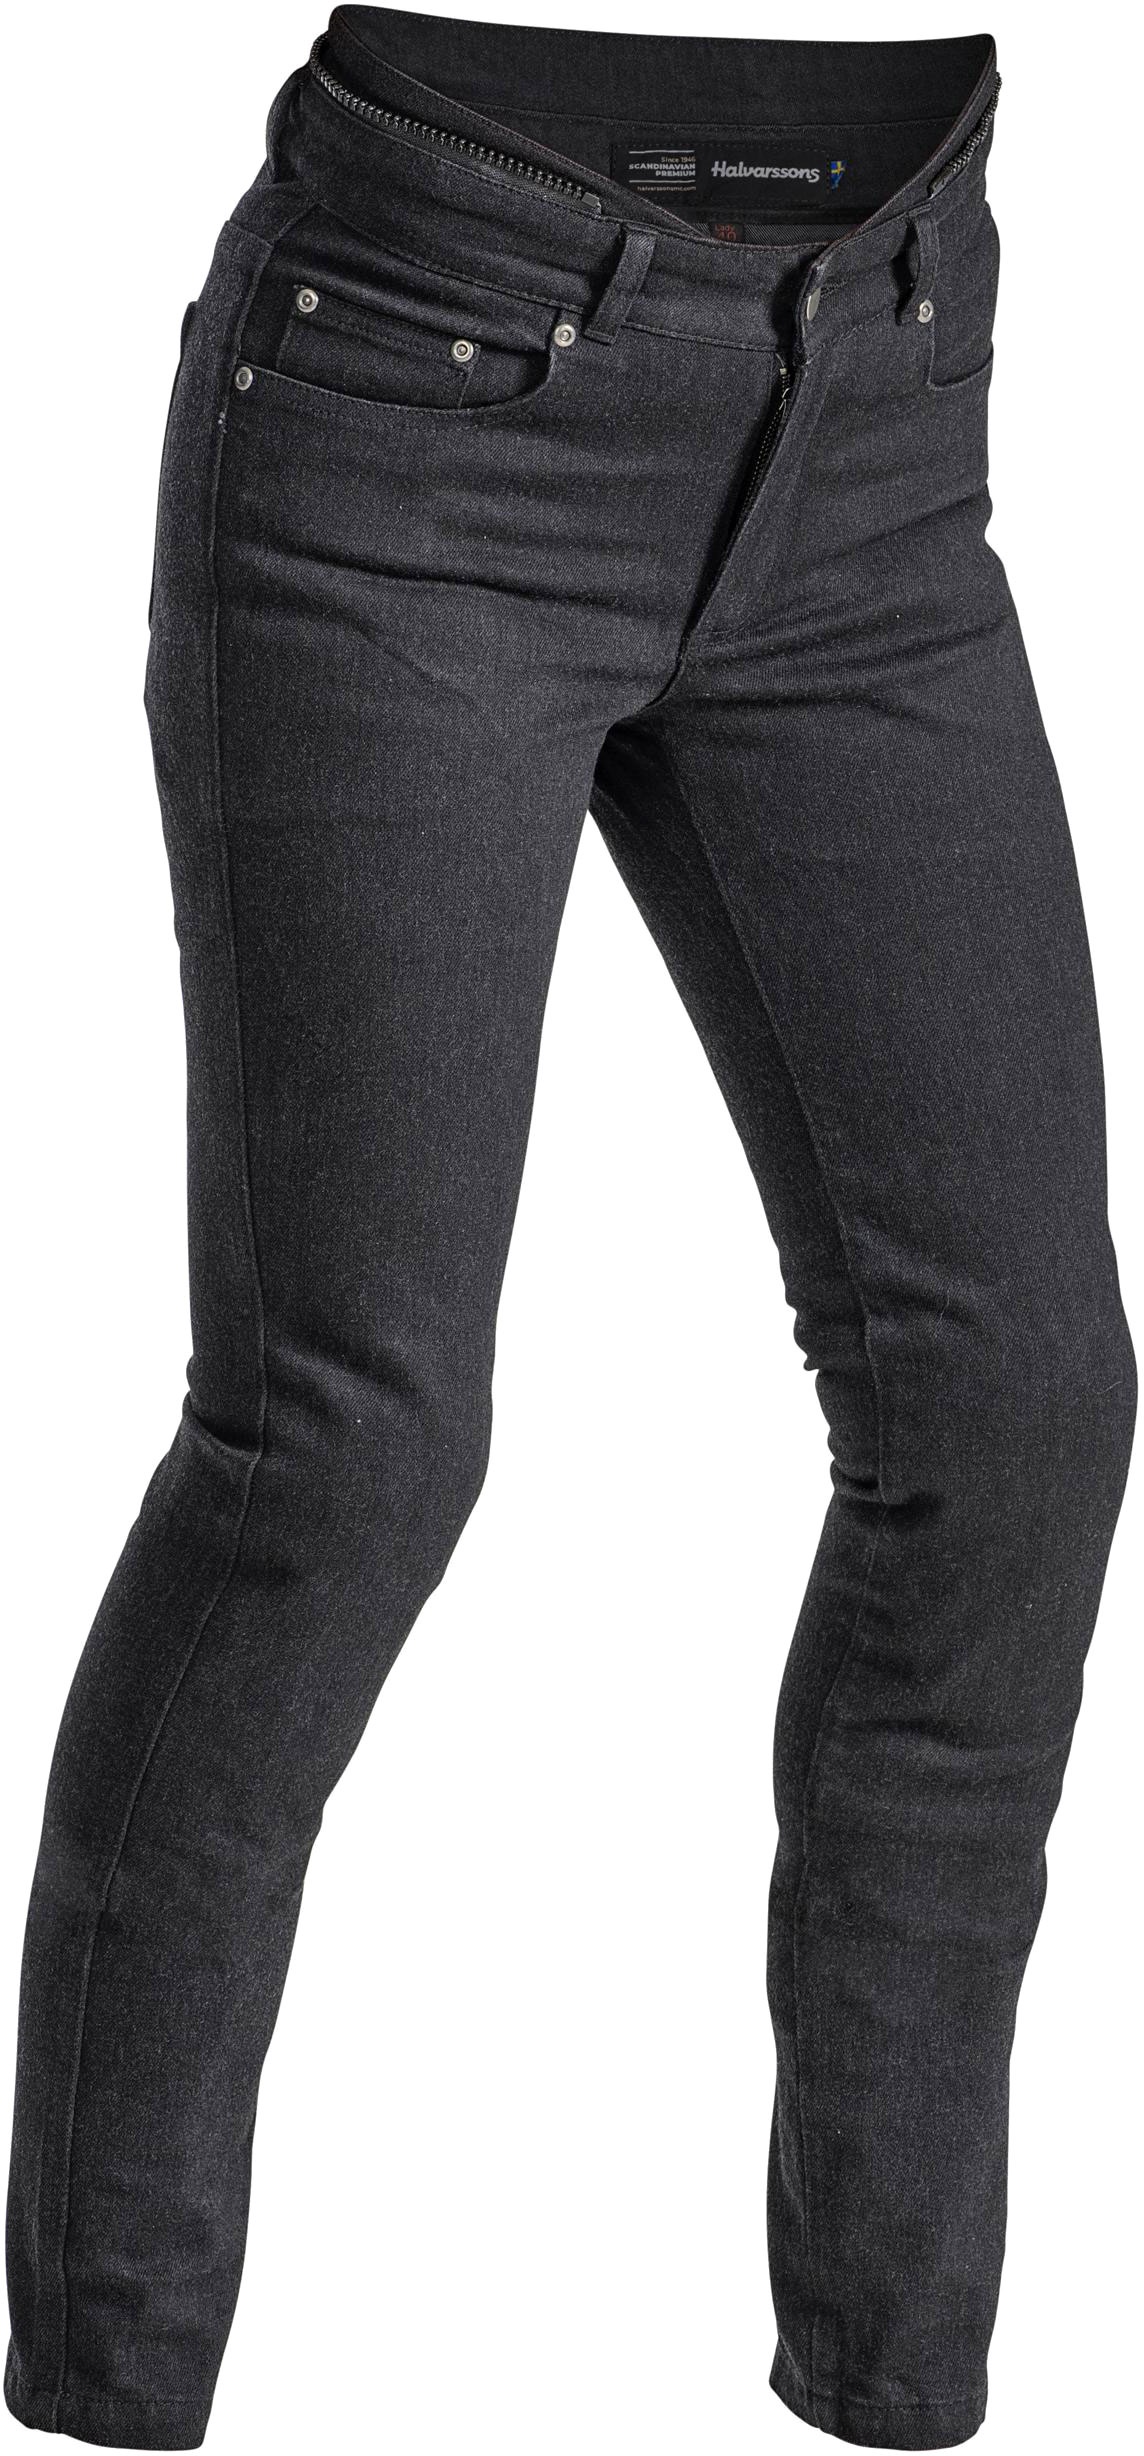 Halvarssons Nyberg, jeans femmes - Noir - 38